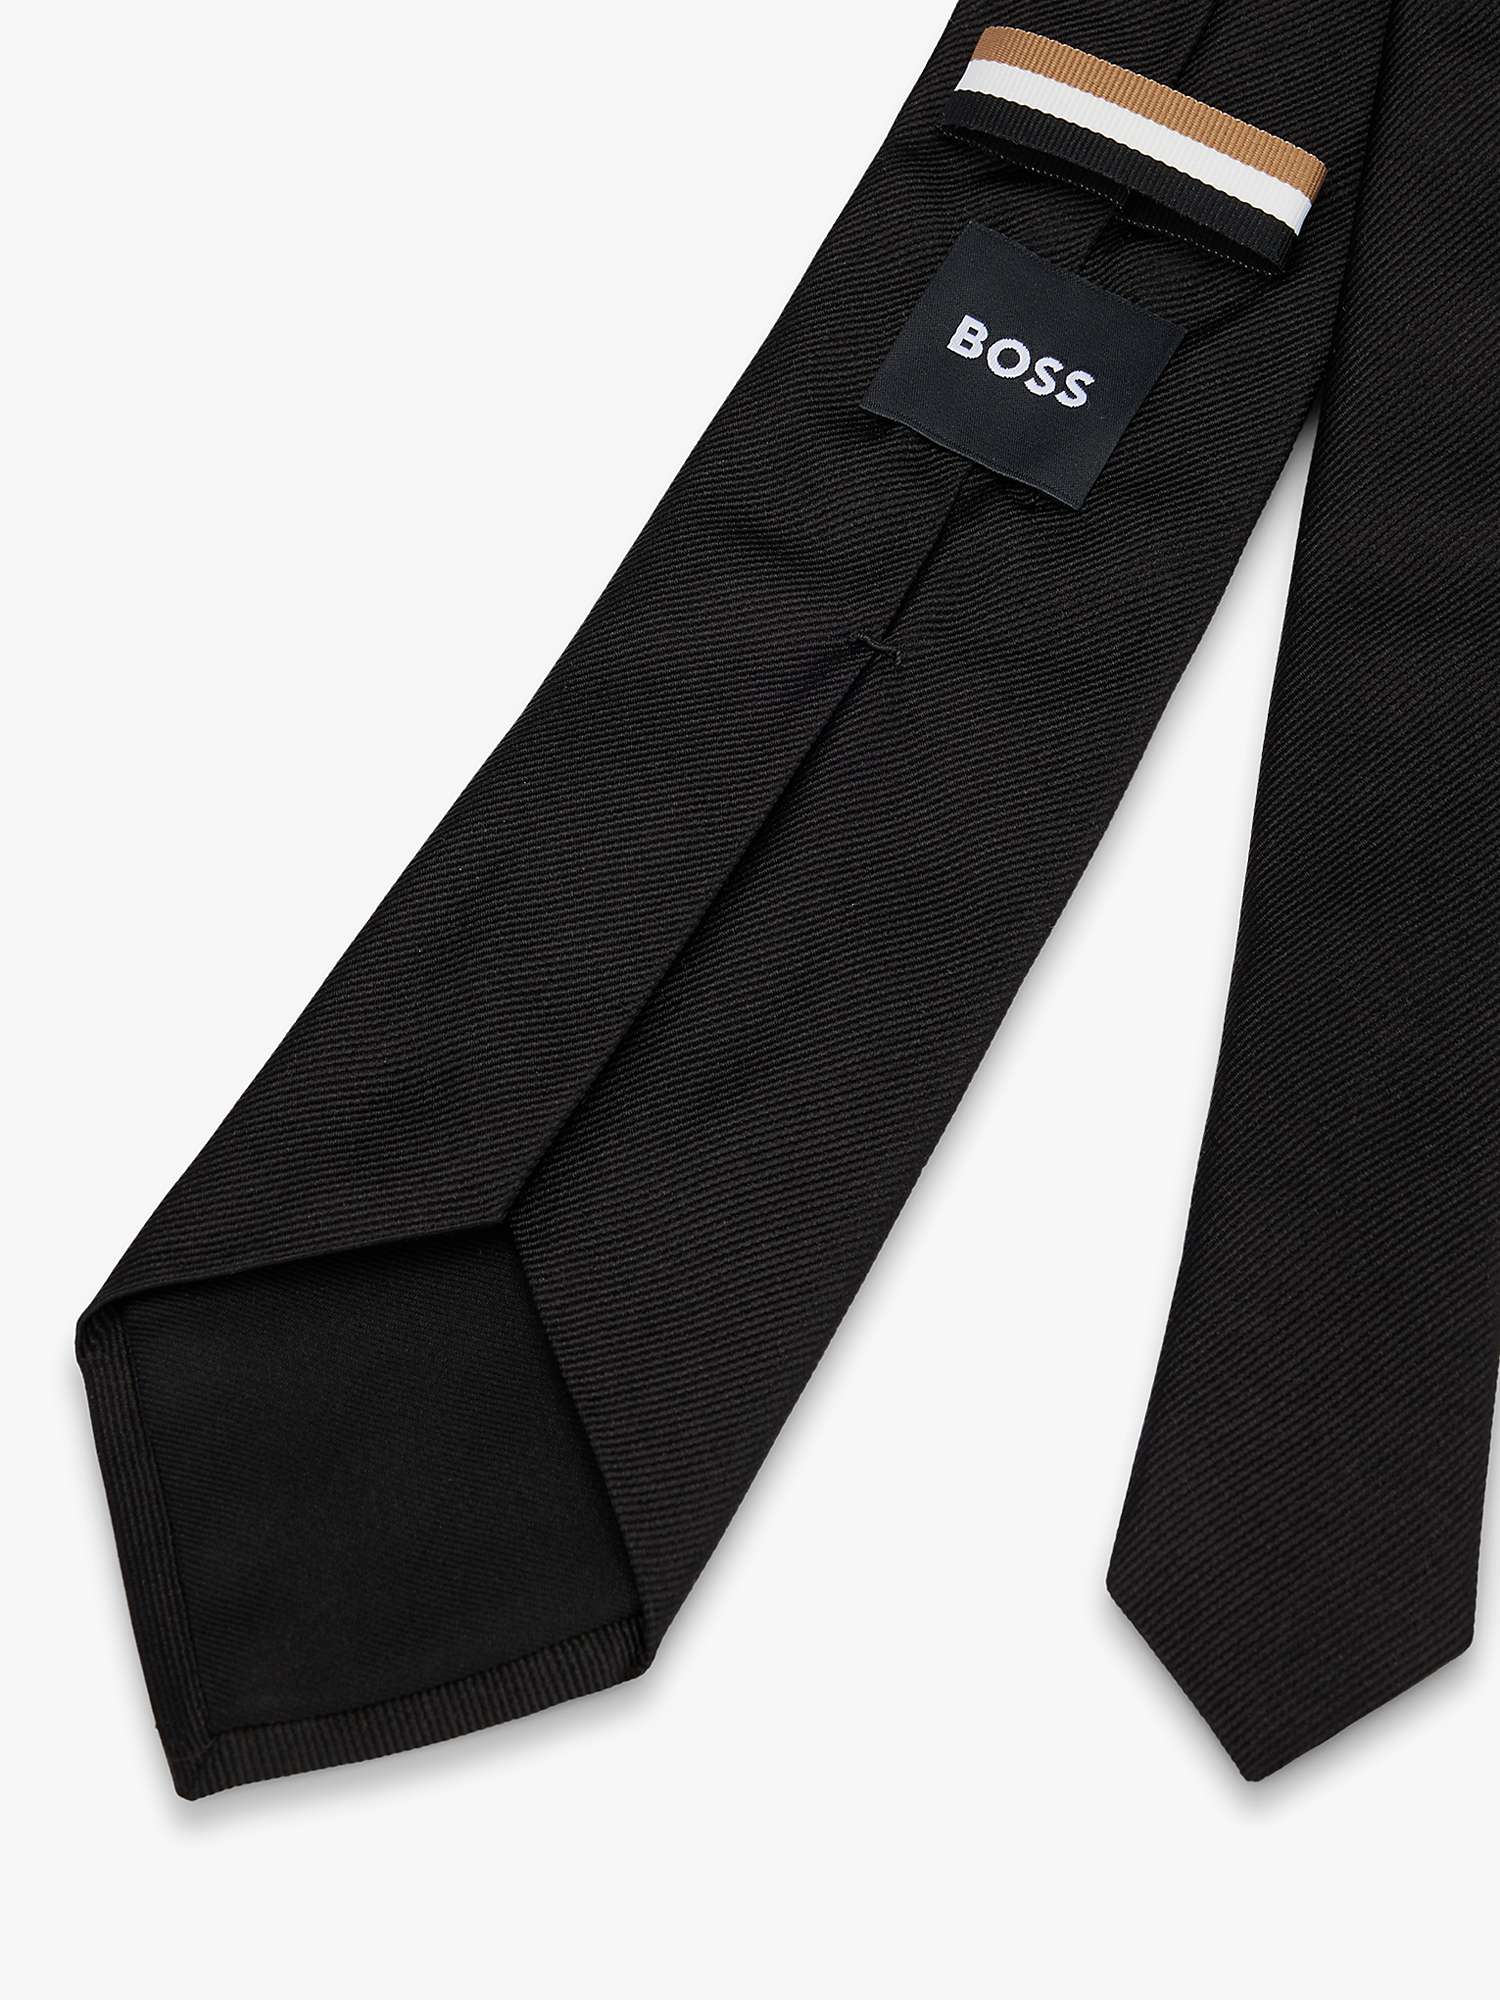 BOSS Silk Tie, Black at John Lewis & Partners